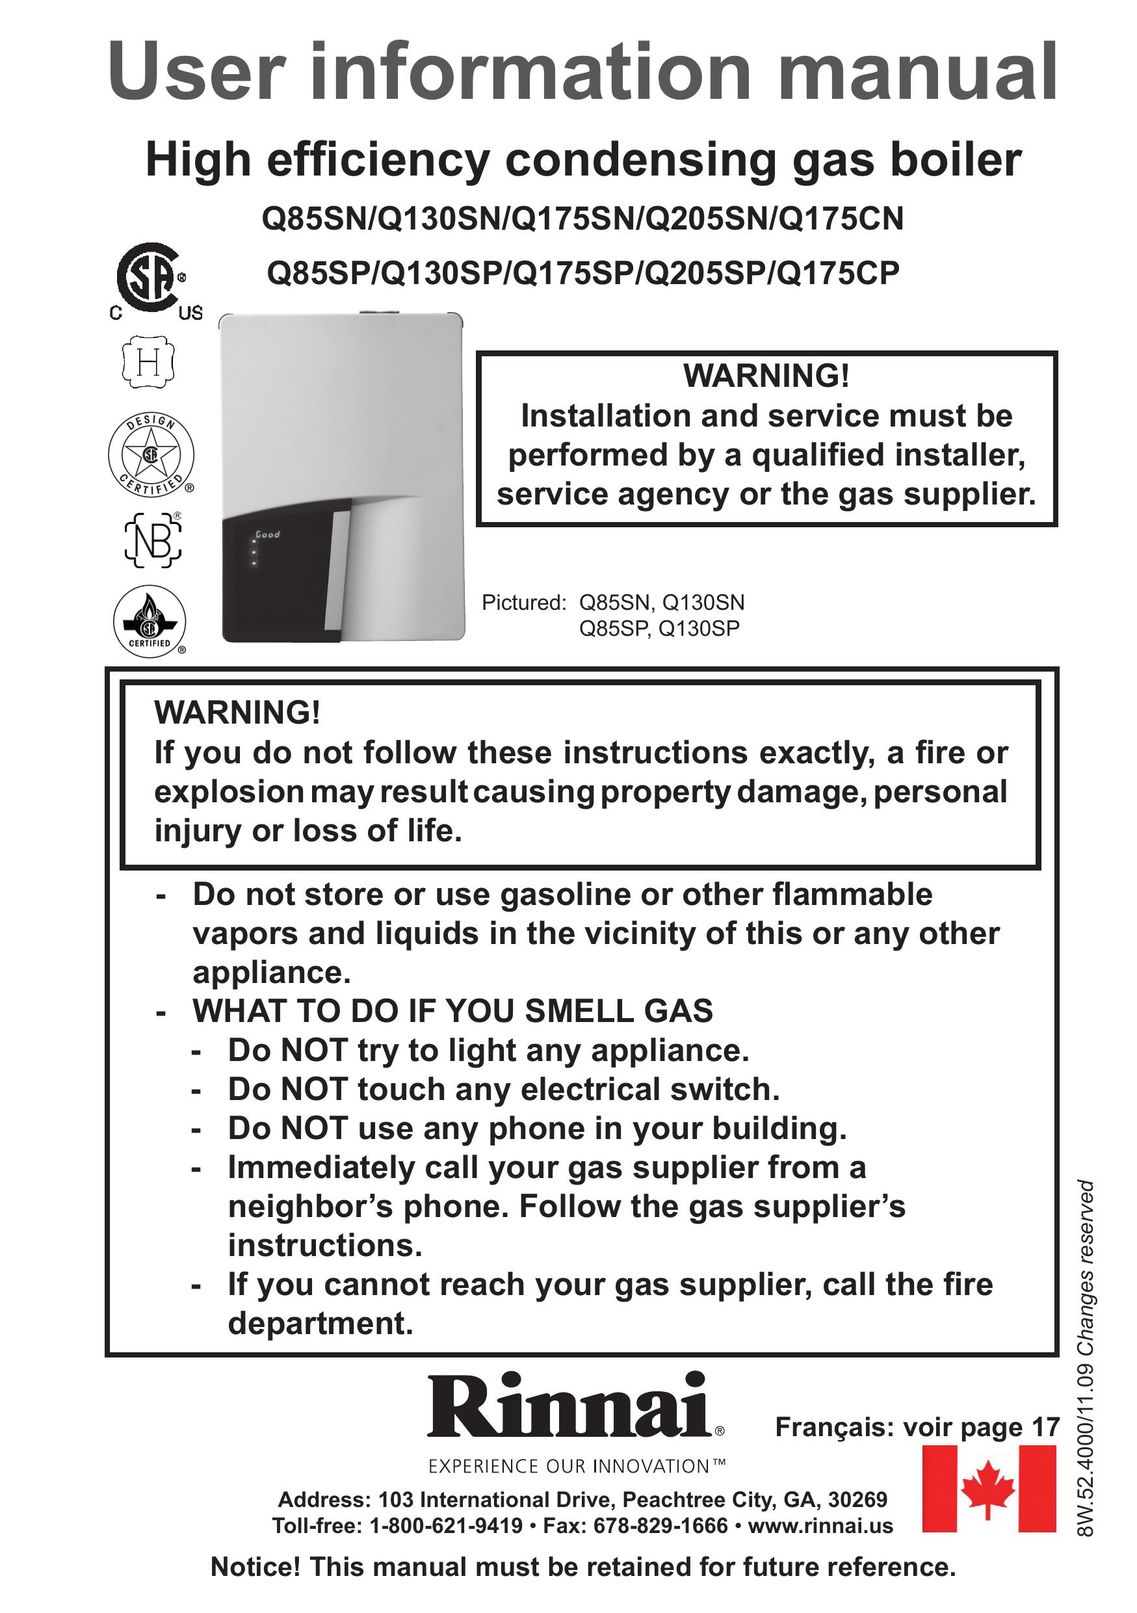 Rinnai Q205SN Boiler User Manual